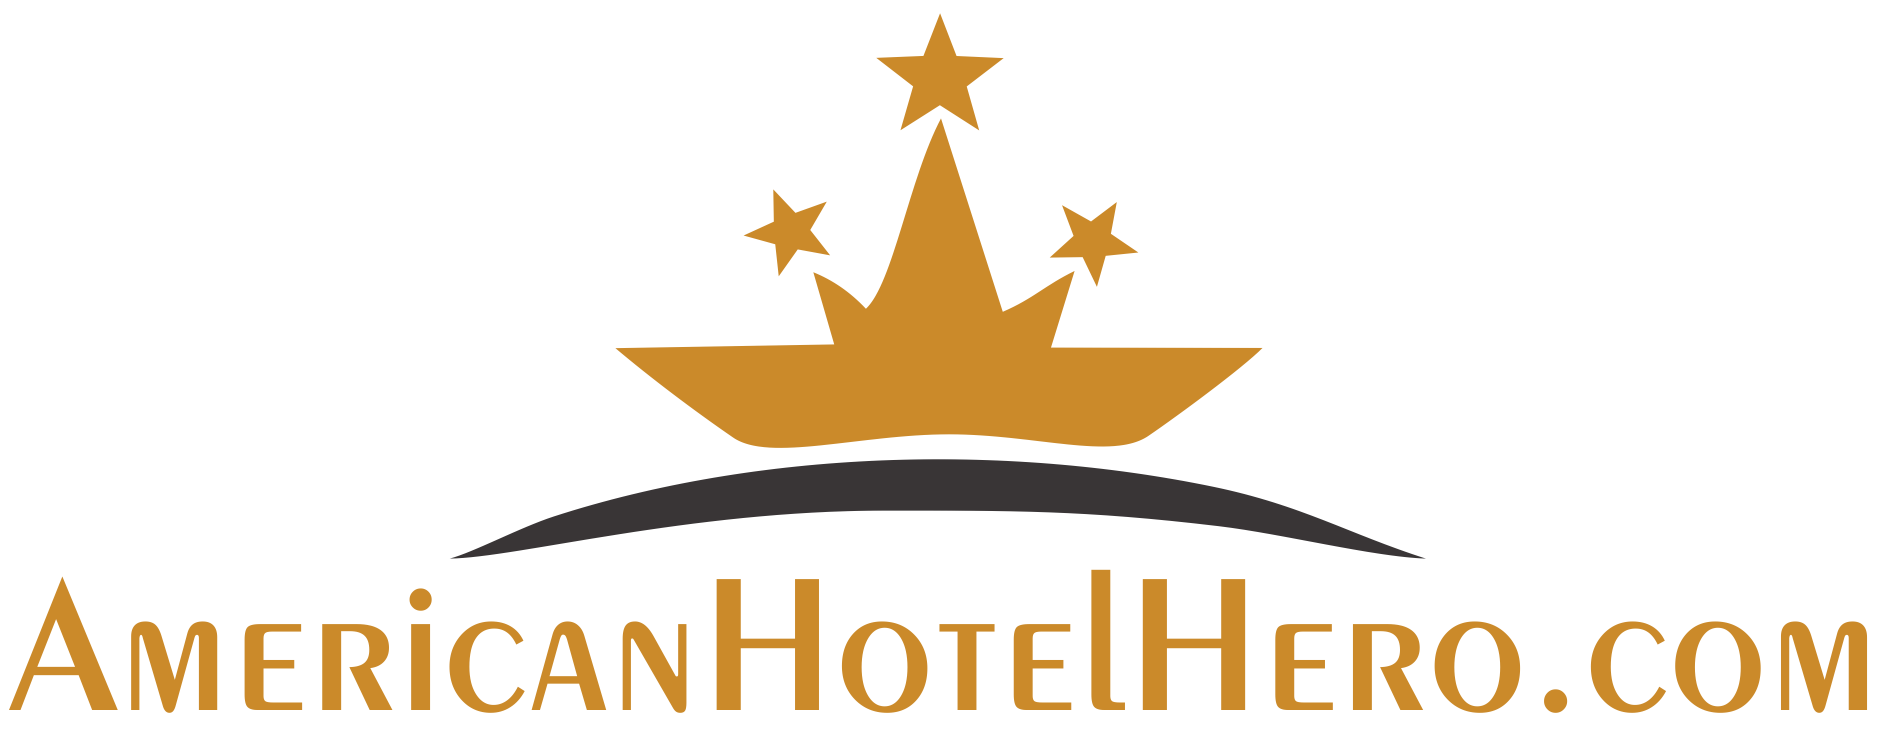 American Hotelhero Award